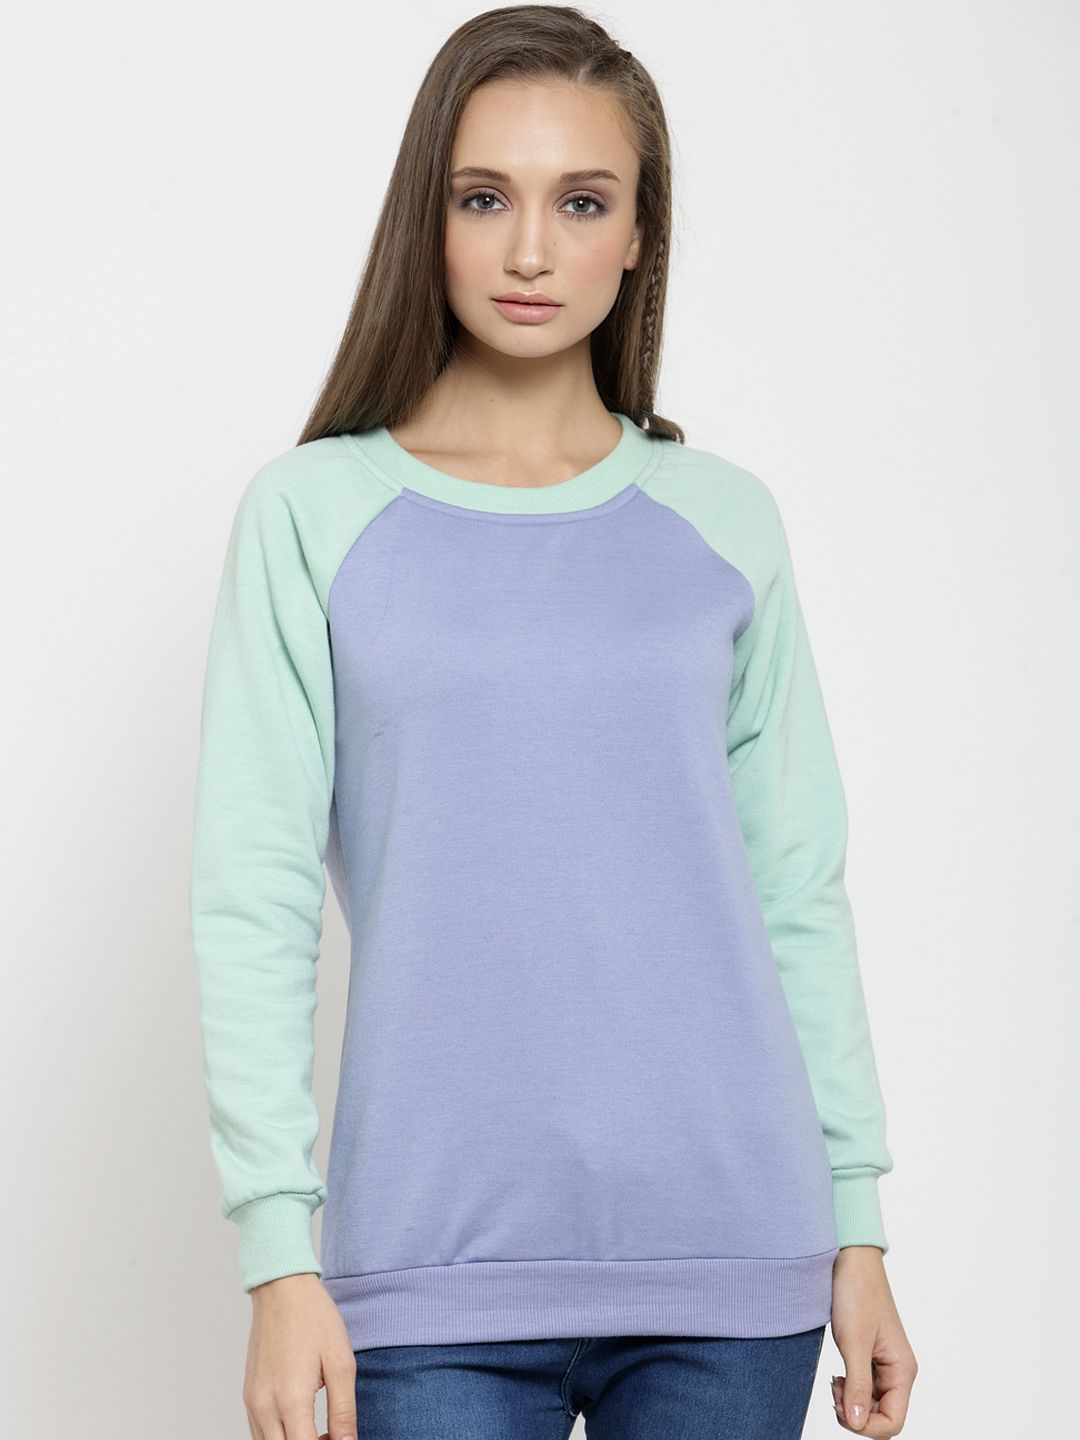 Belle Fille Women Blue & Sea Green Colourblocked Sweatshirt Price in India